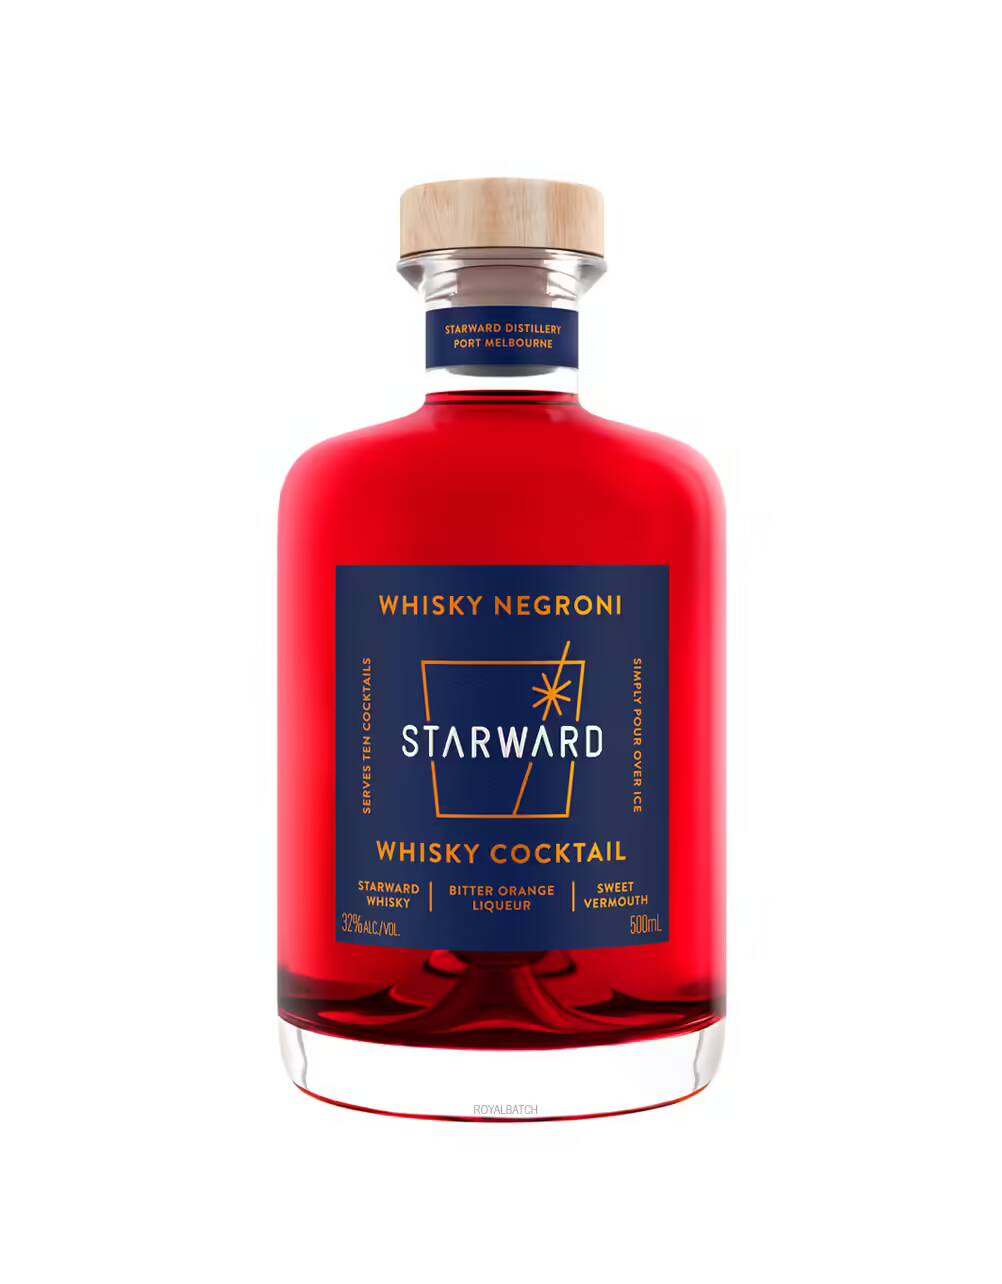 Starward Negroni Cocktail Whisky